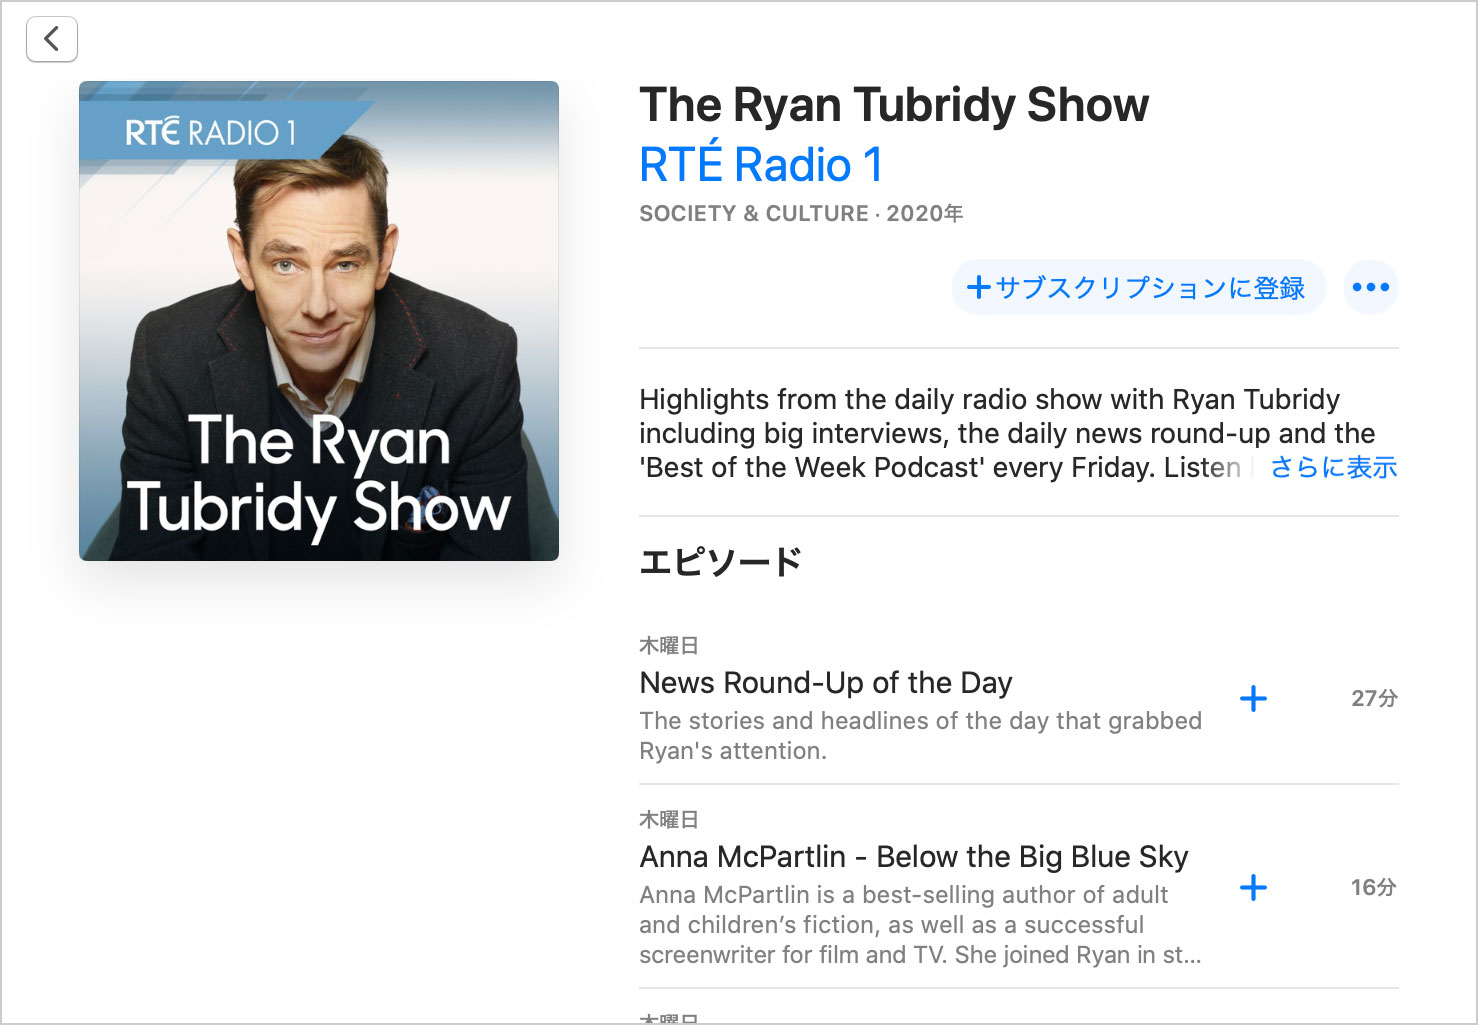 The Ryan Tubridy Show